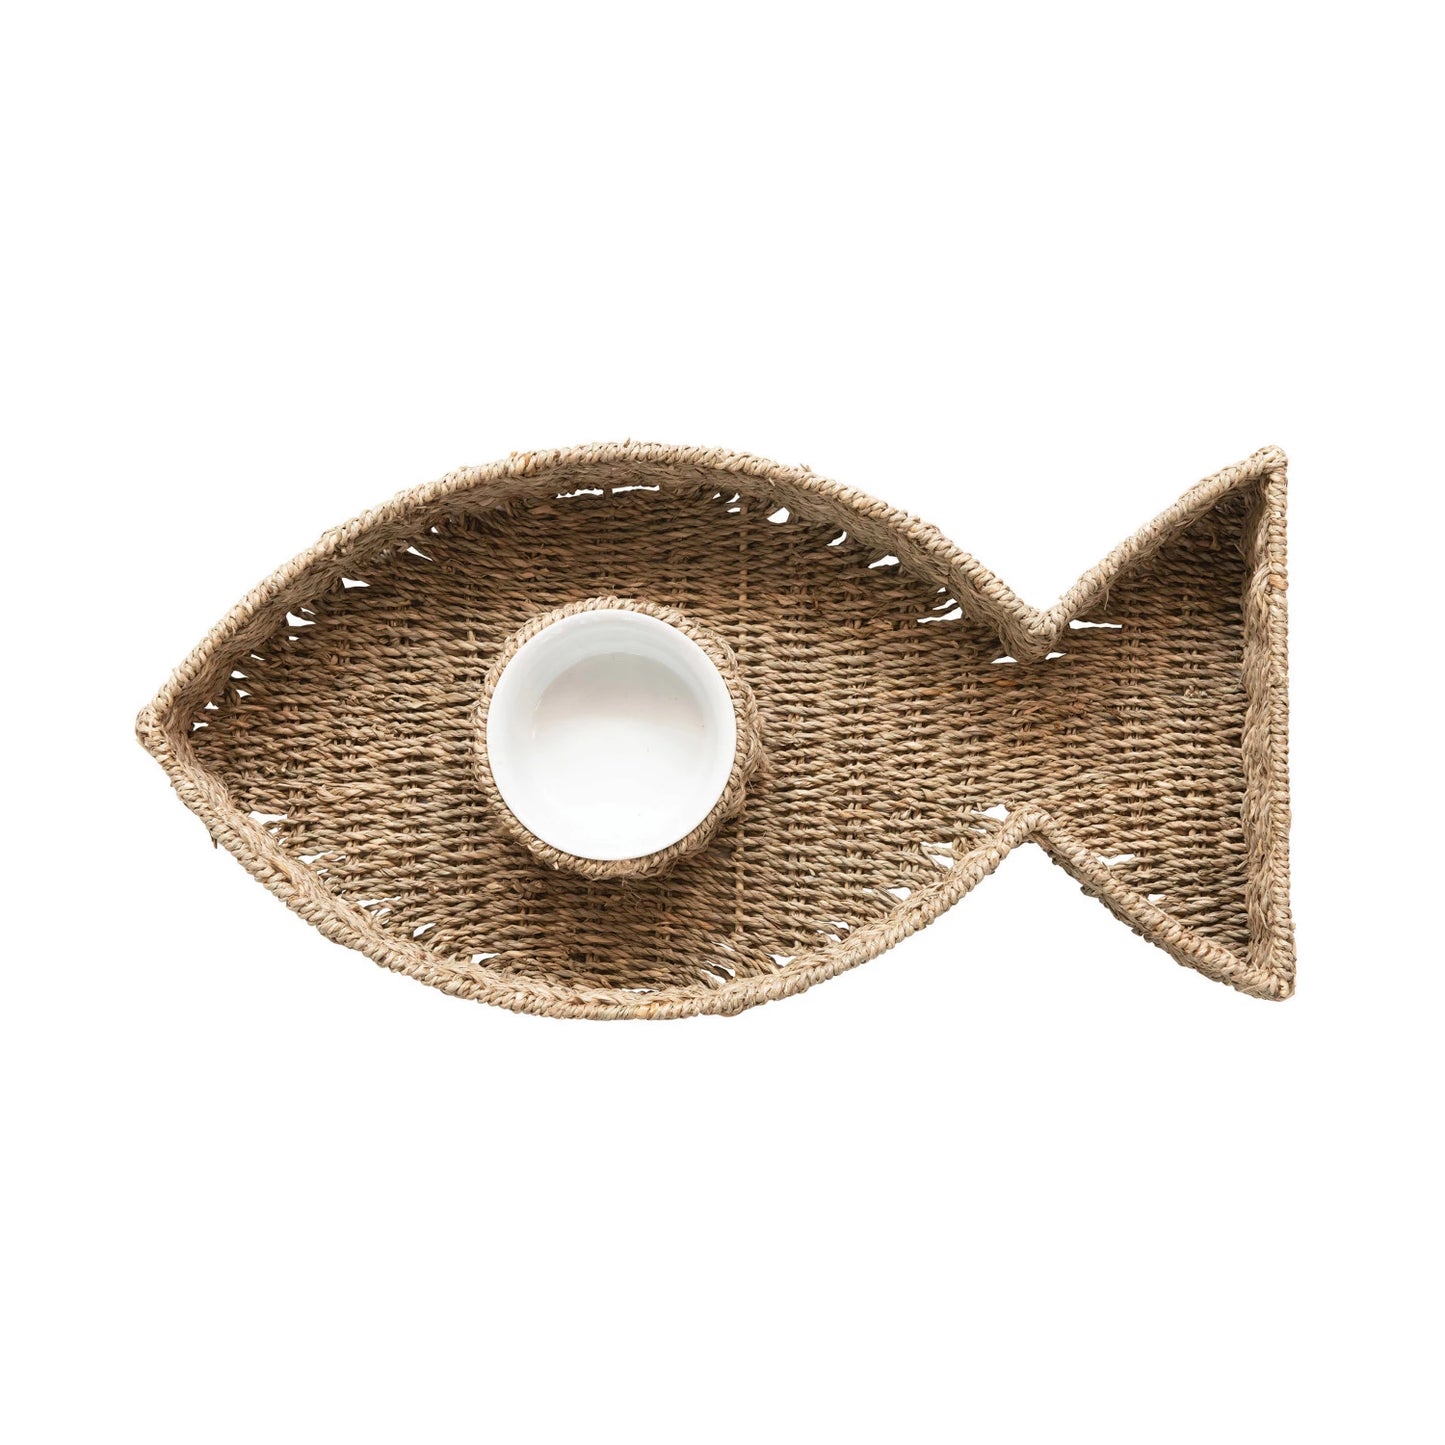 Chip and Dip Basket - Fish